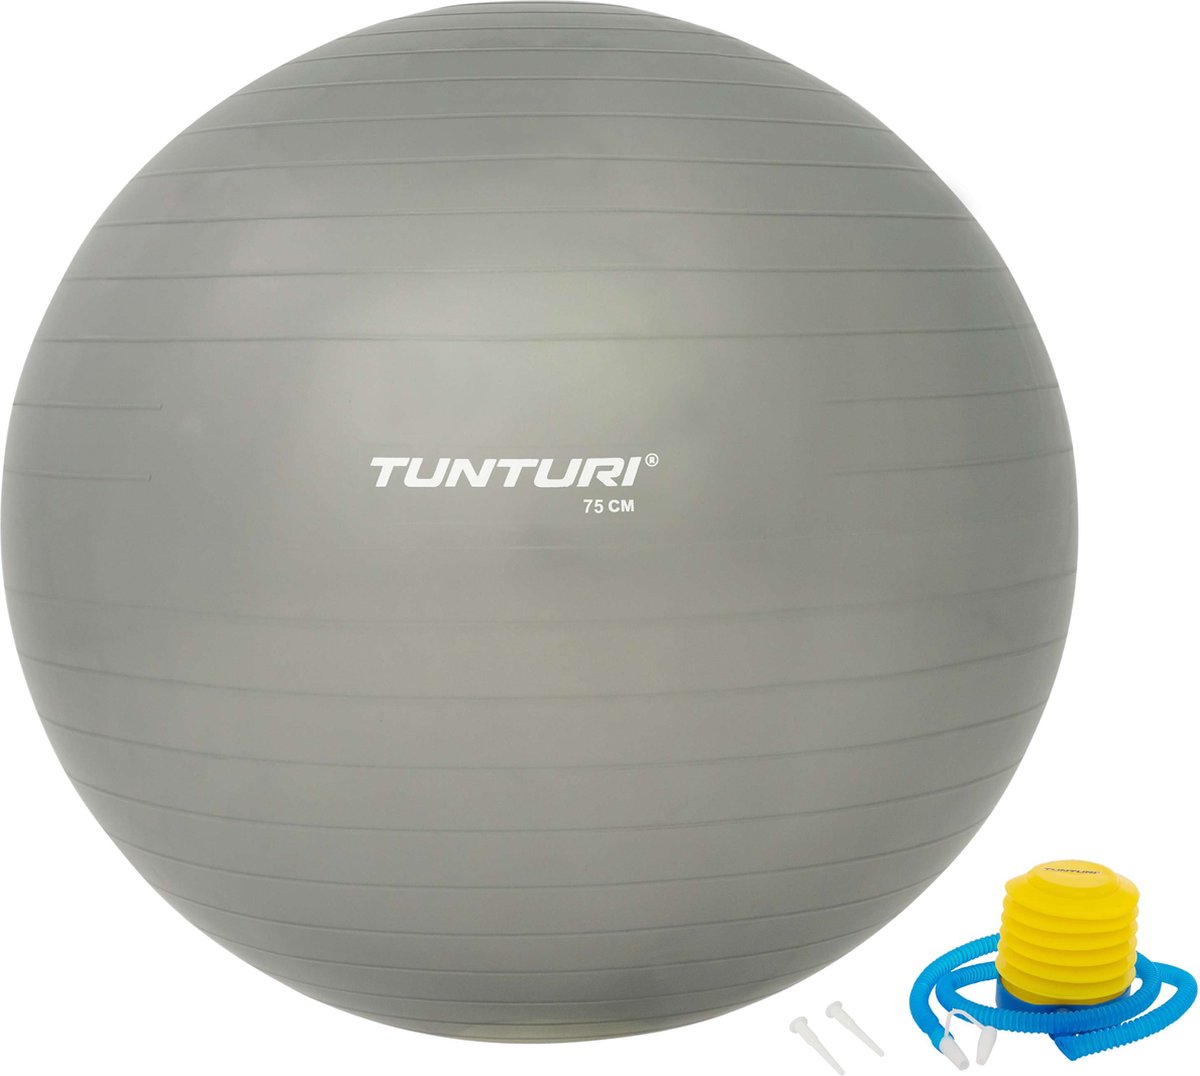 Tunturi Fitness bal - Yoga bal inclusief pomp - Pilates bal - Zwangerschaps bal - 75 cm - Kleur: zilver - Incl. gratis fitness app - Tunturi